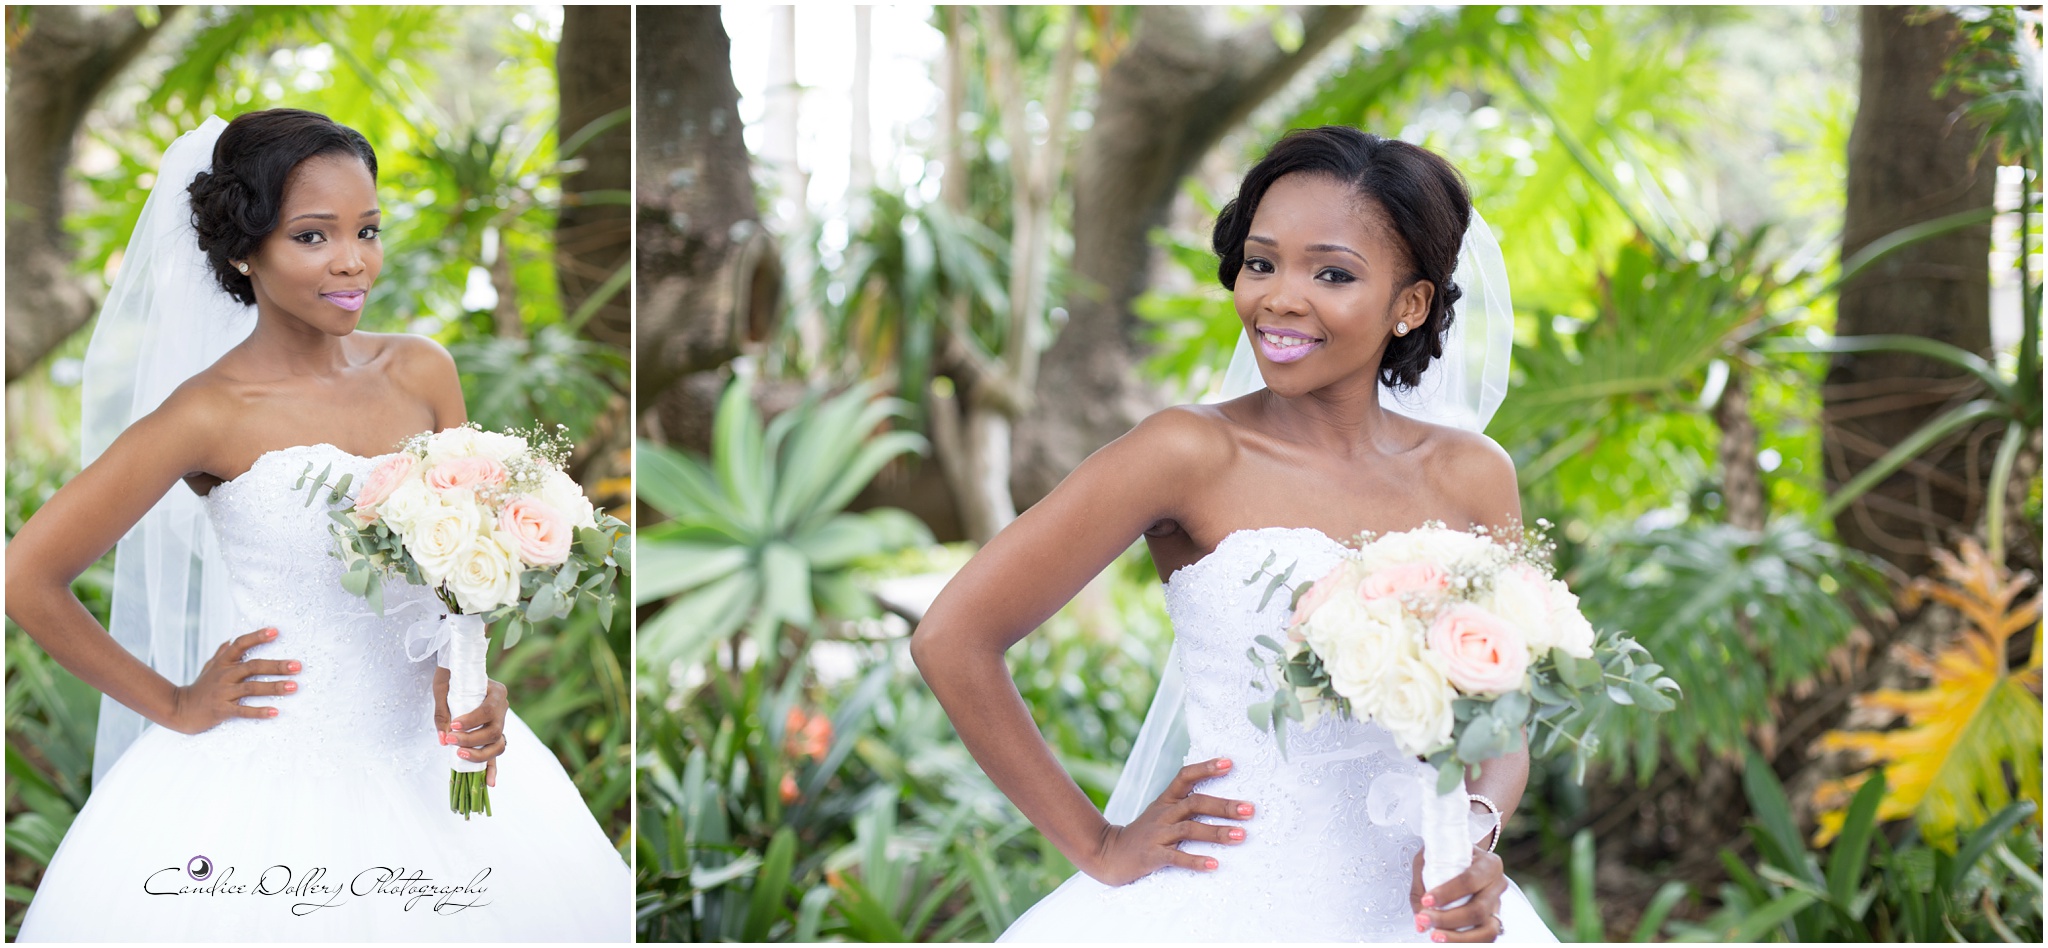 Asanda & Bonga's Wedding - Candice Dollery Photography_8219